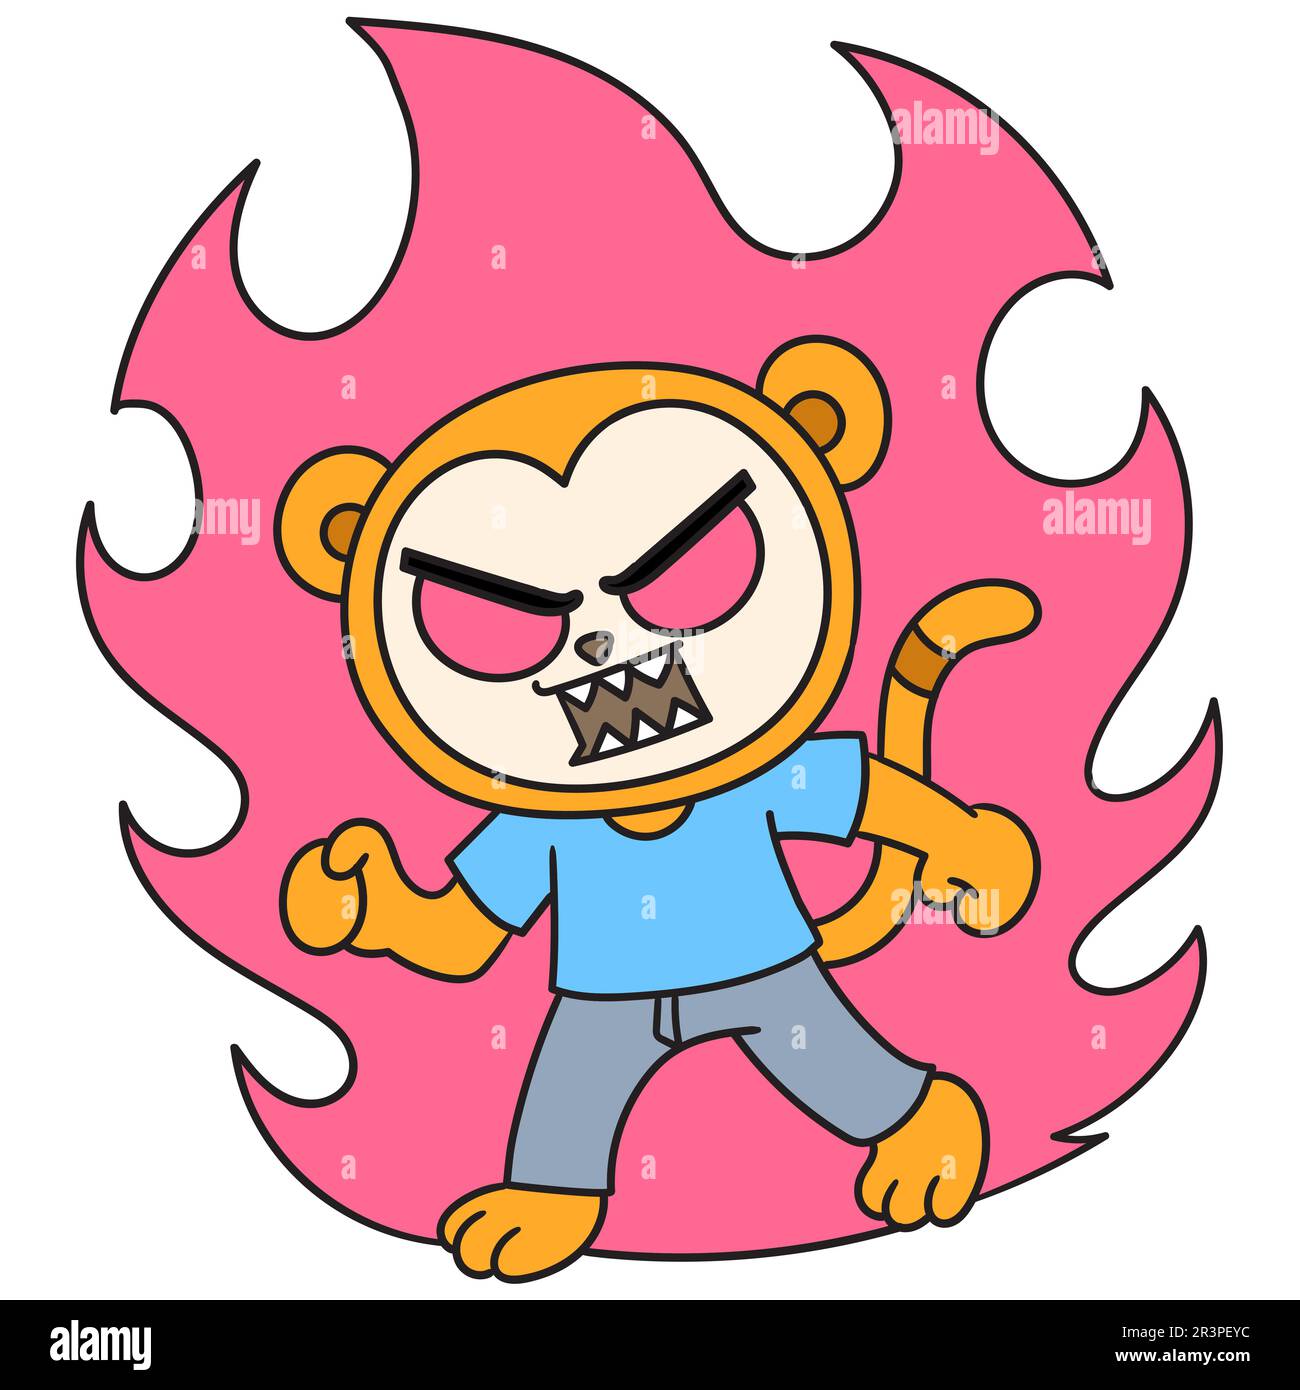 Someone angry emoji sticker, doodle kawaii. doodle icon image Stock Photo